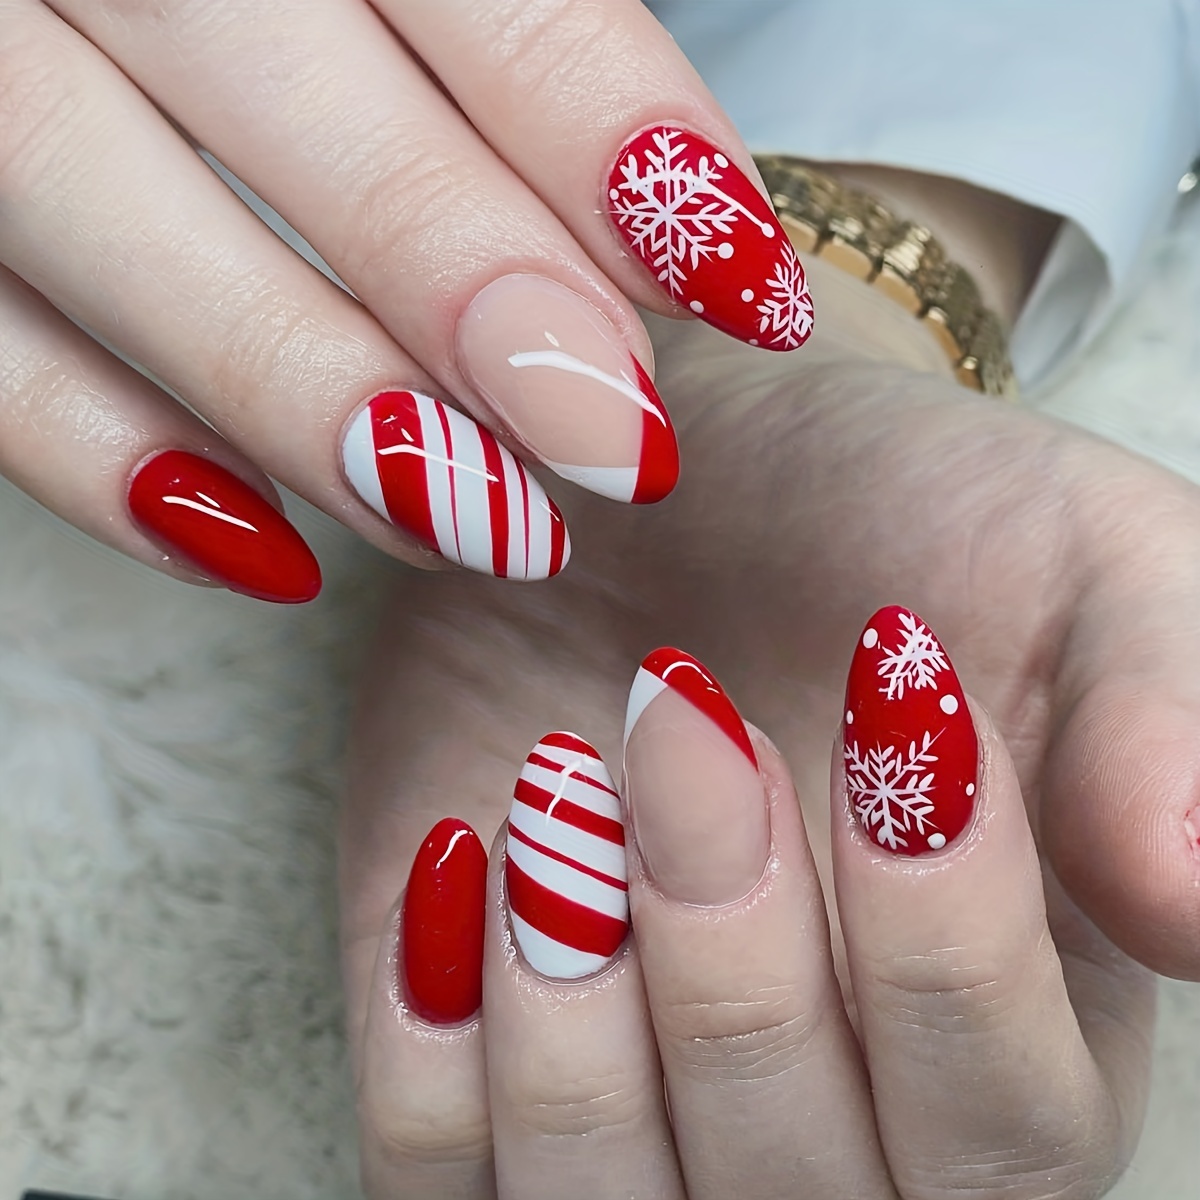 Christmas nails - 14 easy festive nail art designs for 2017